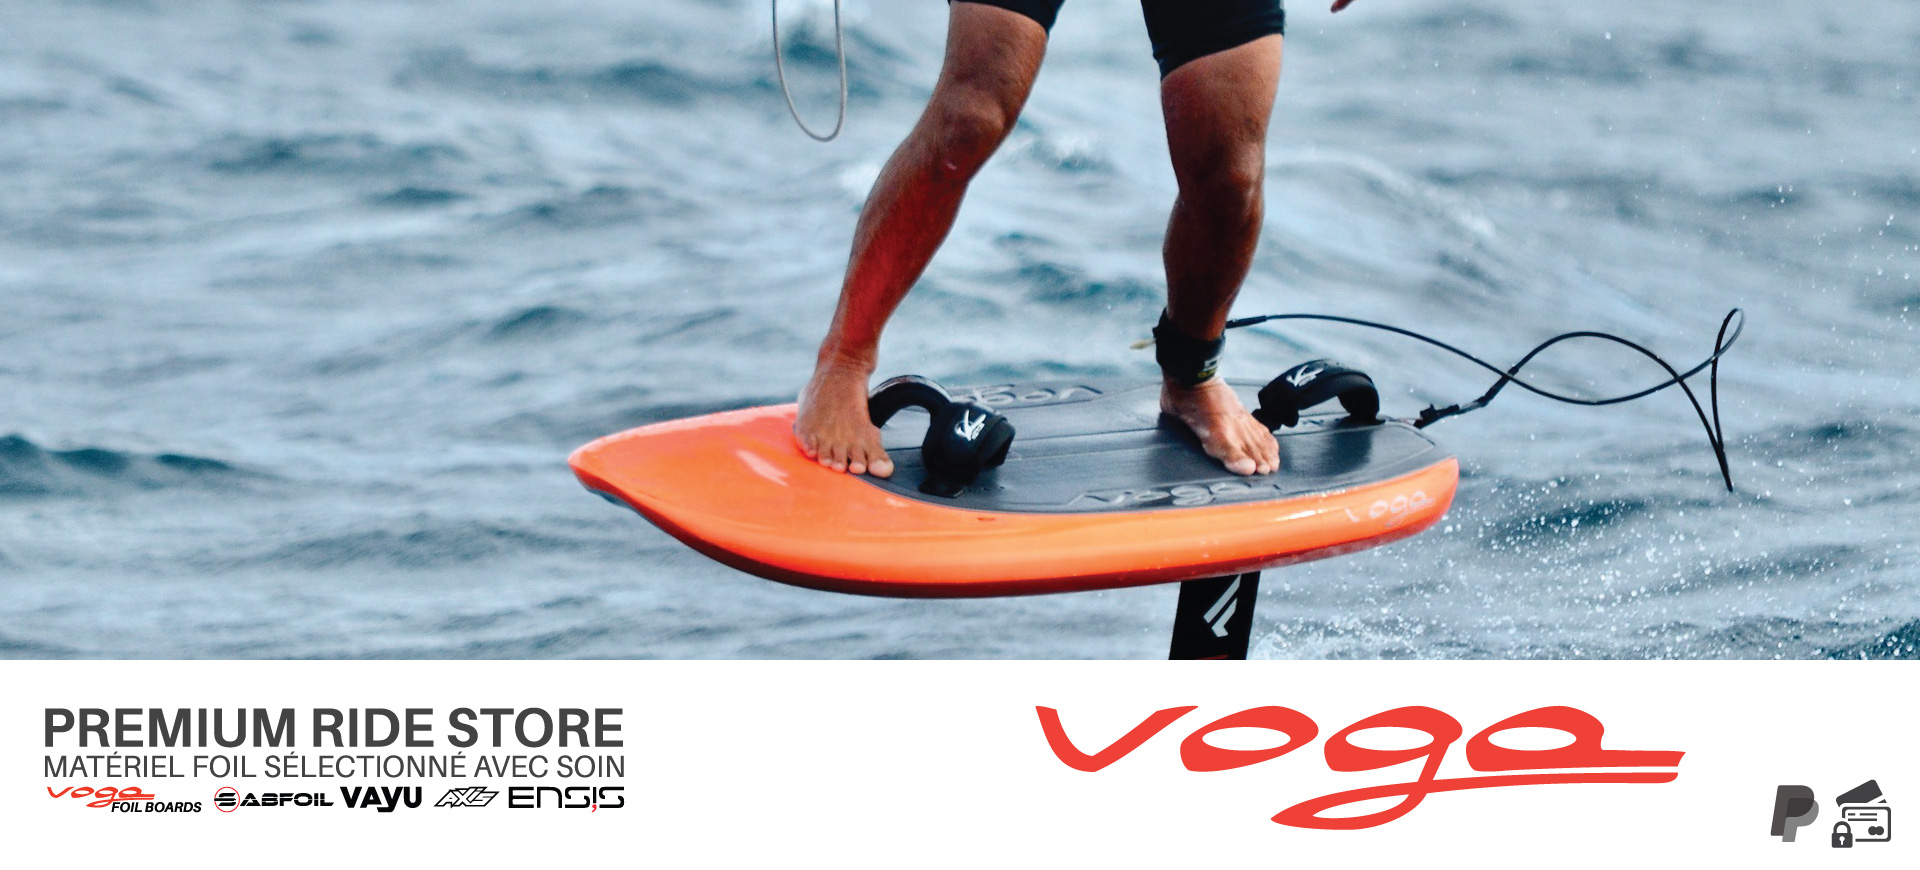 Voga Premium Ride Store planches de wing foil freestyle voga marine